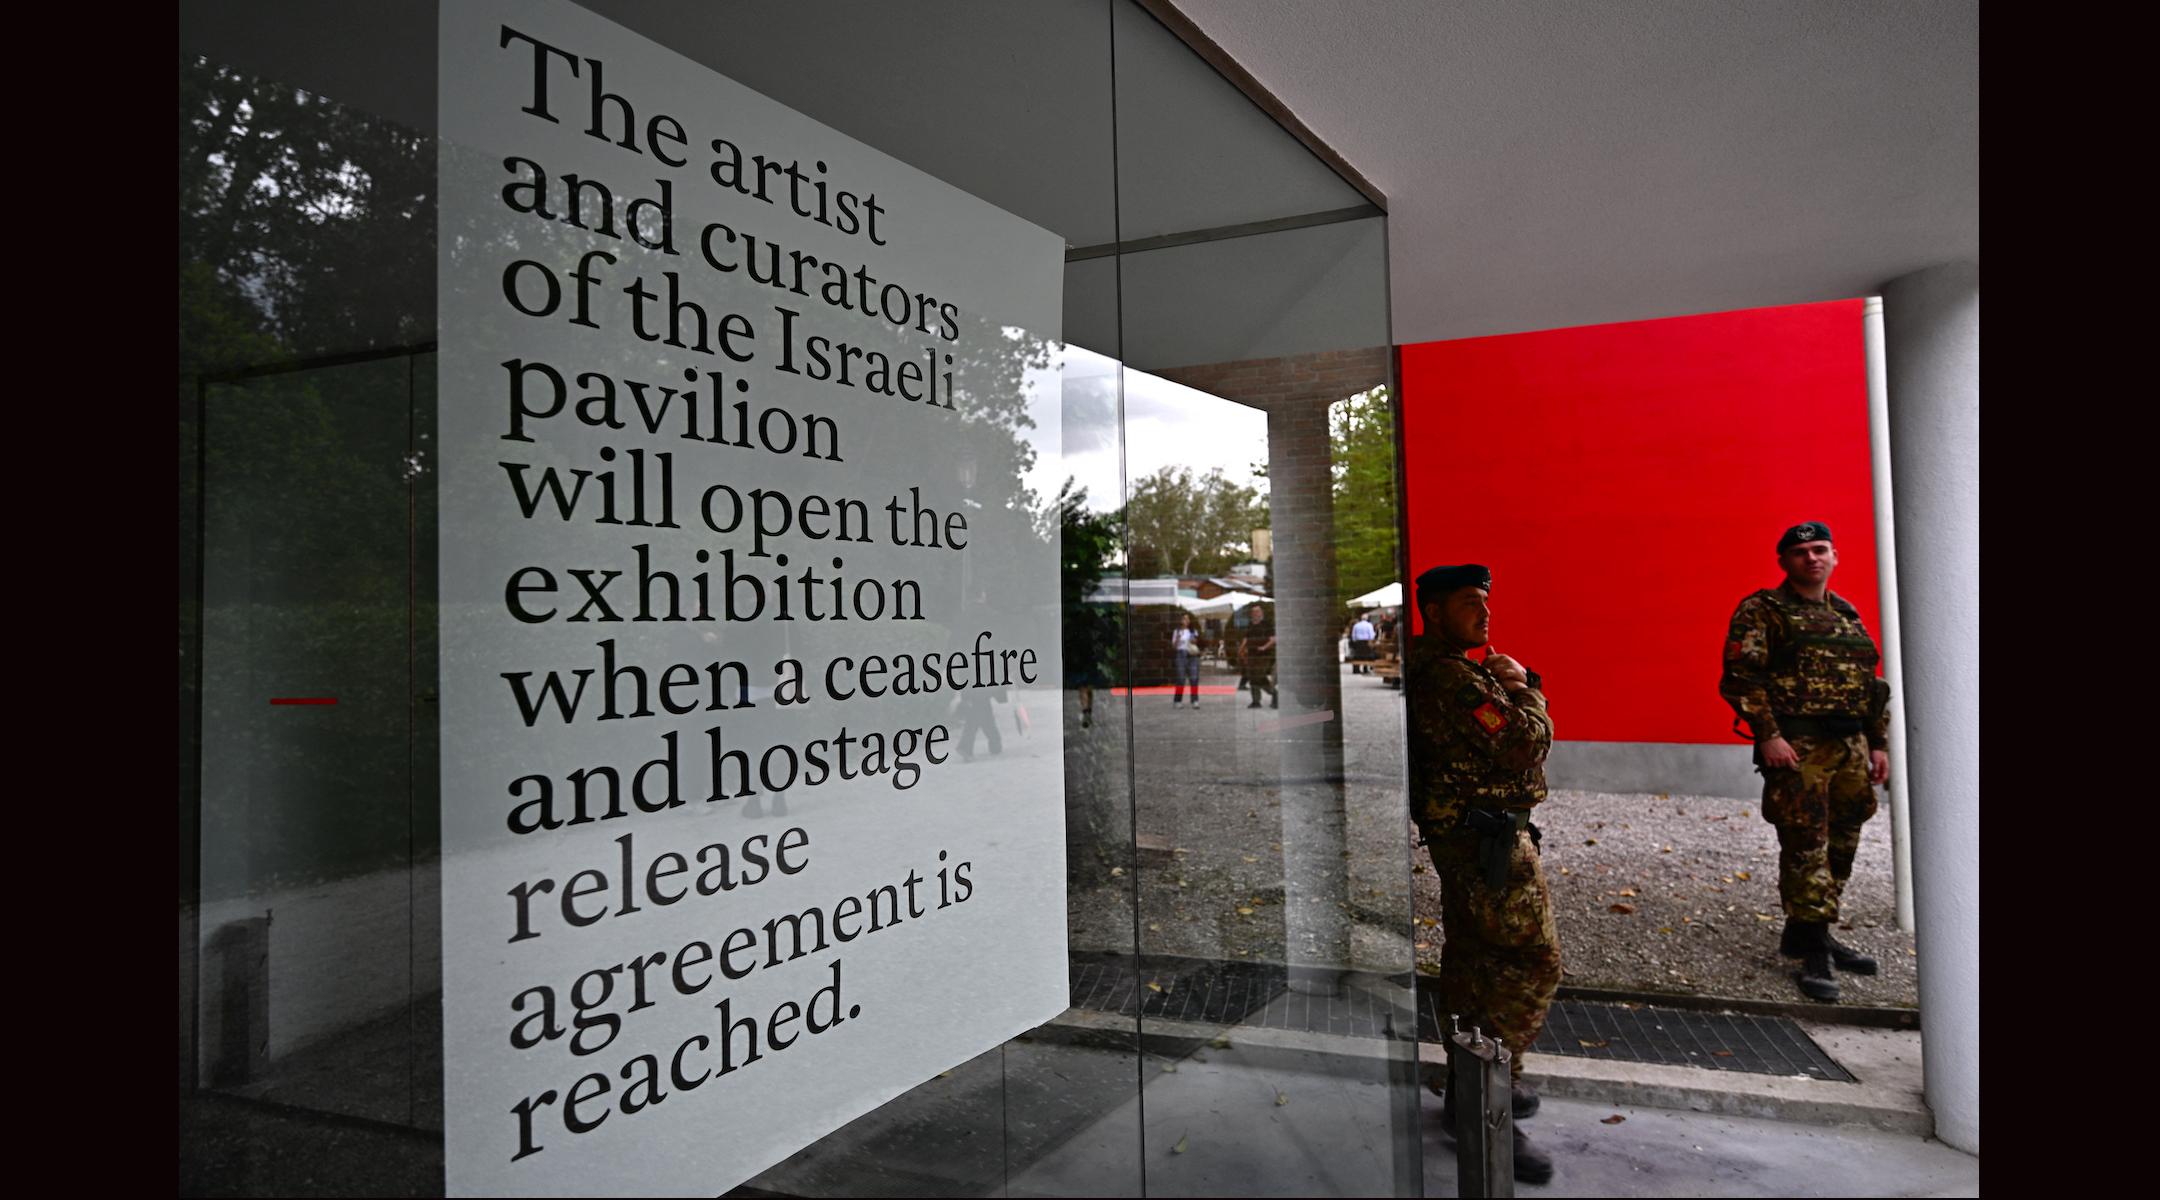 Israel’s representative at Venice Biennale shuts down art exhibit, demanding ceasefire and hostage deal